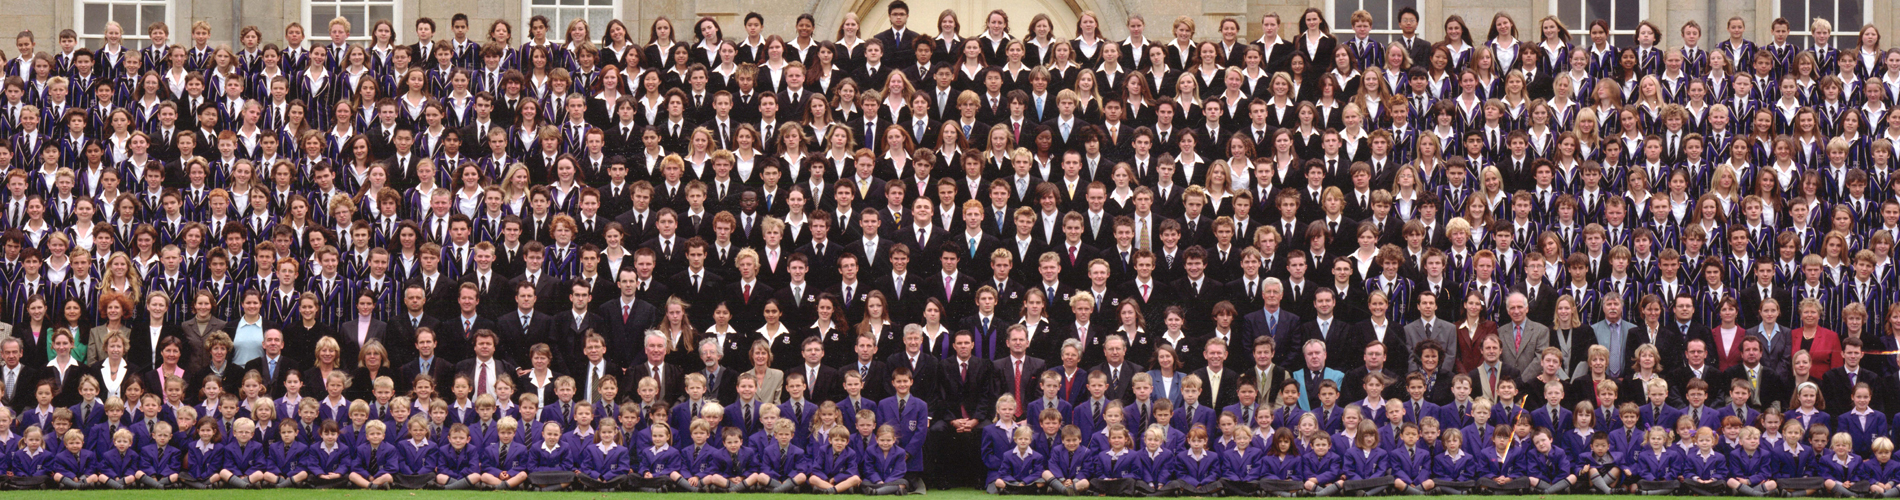 2004 Whole School